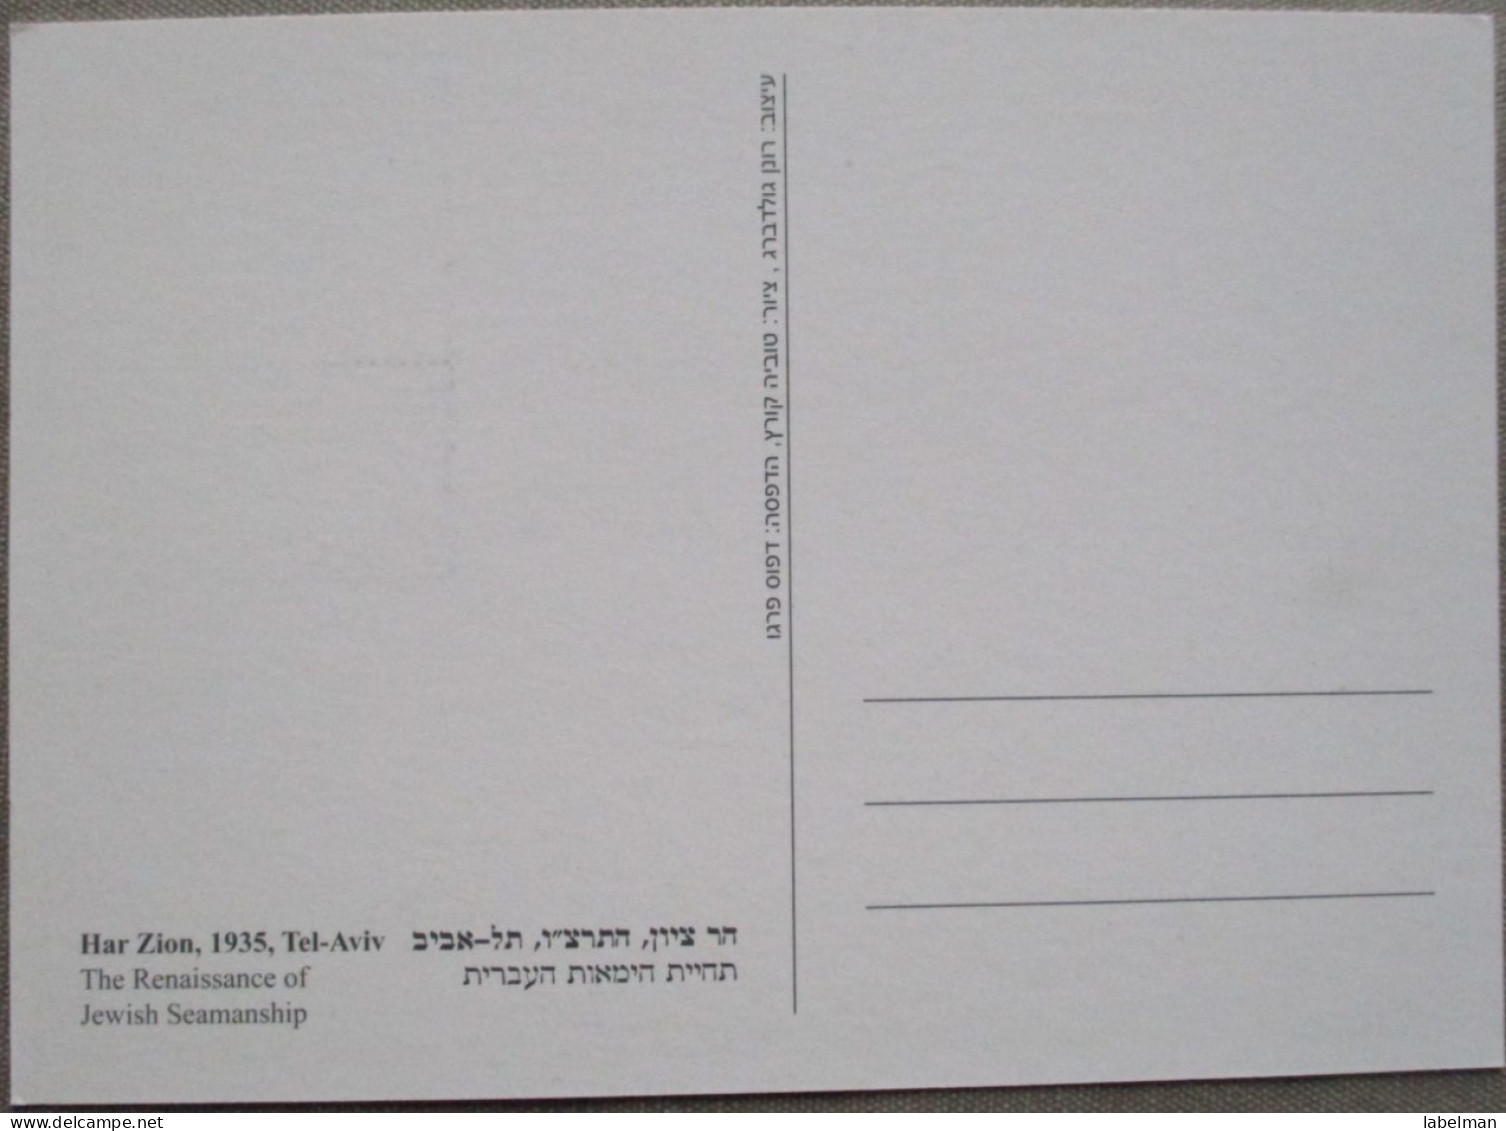 ISRAEL 2012 MAXIMUM CARD POSTCARD TEL AVIV HAR ZION MV FIRST DAY OF ISSUE CARTOLINA CARTE POSTALE POSTKARTE CARTOLINA - Tarjetas – Máxima